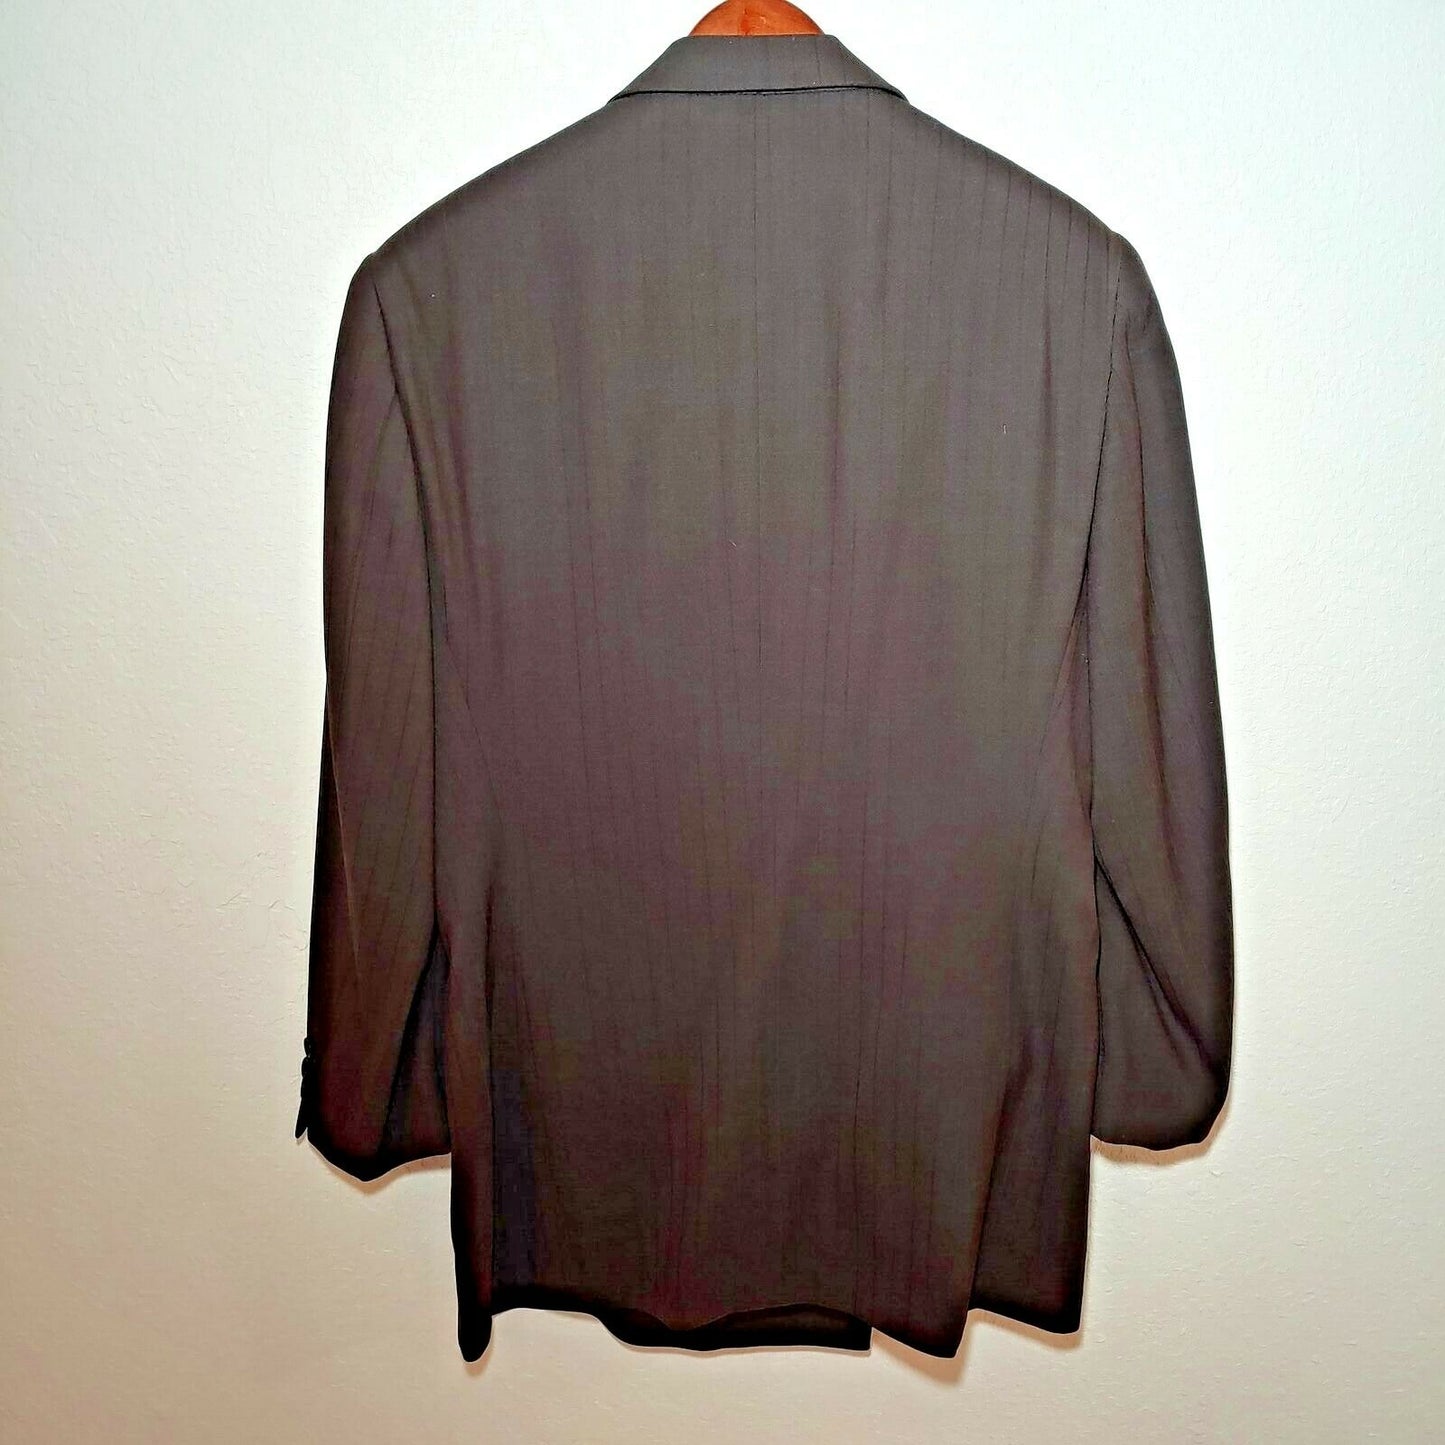 Saks Fifth | Giorgio Armani | Pin Stripe Suit Jacket and Pants